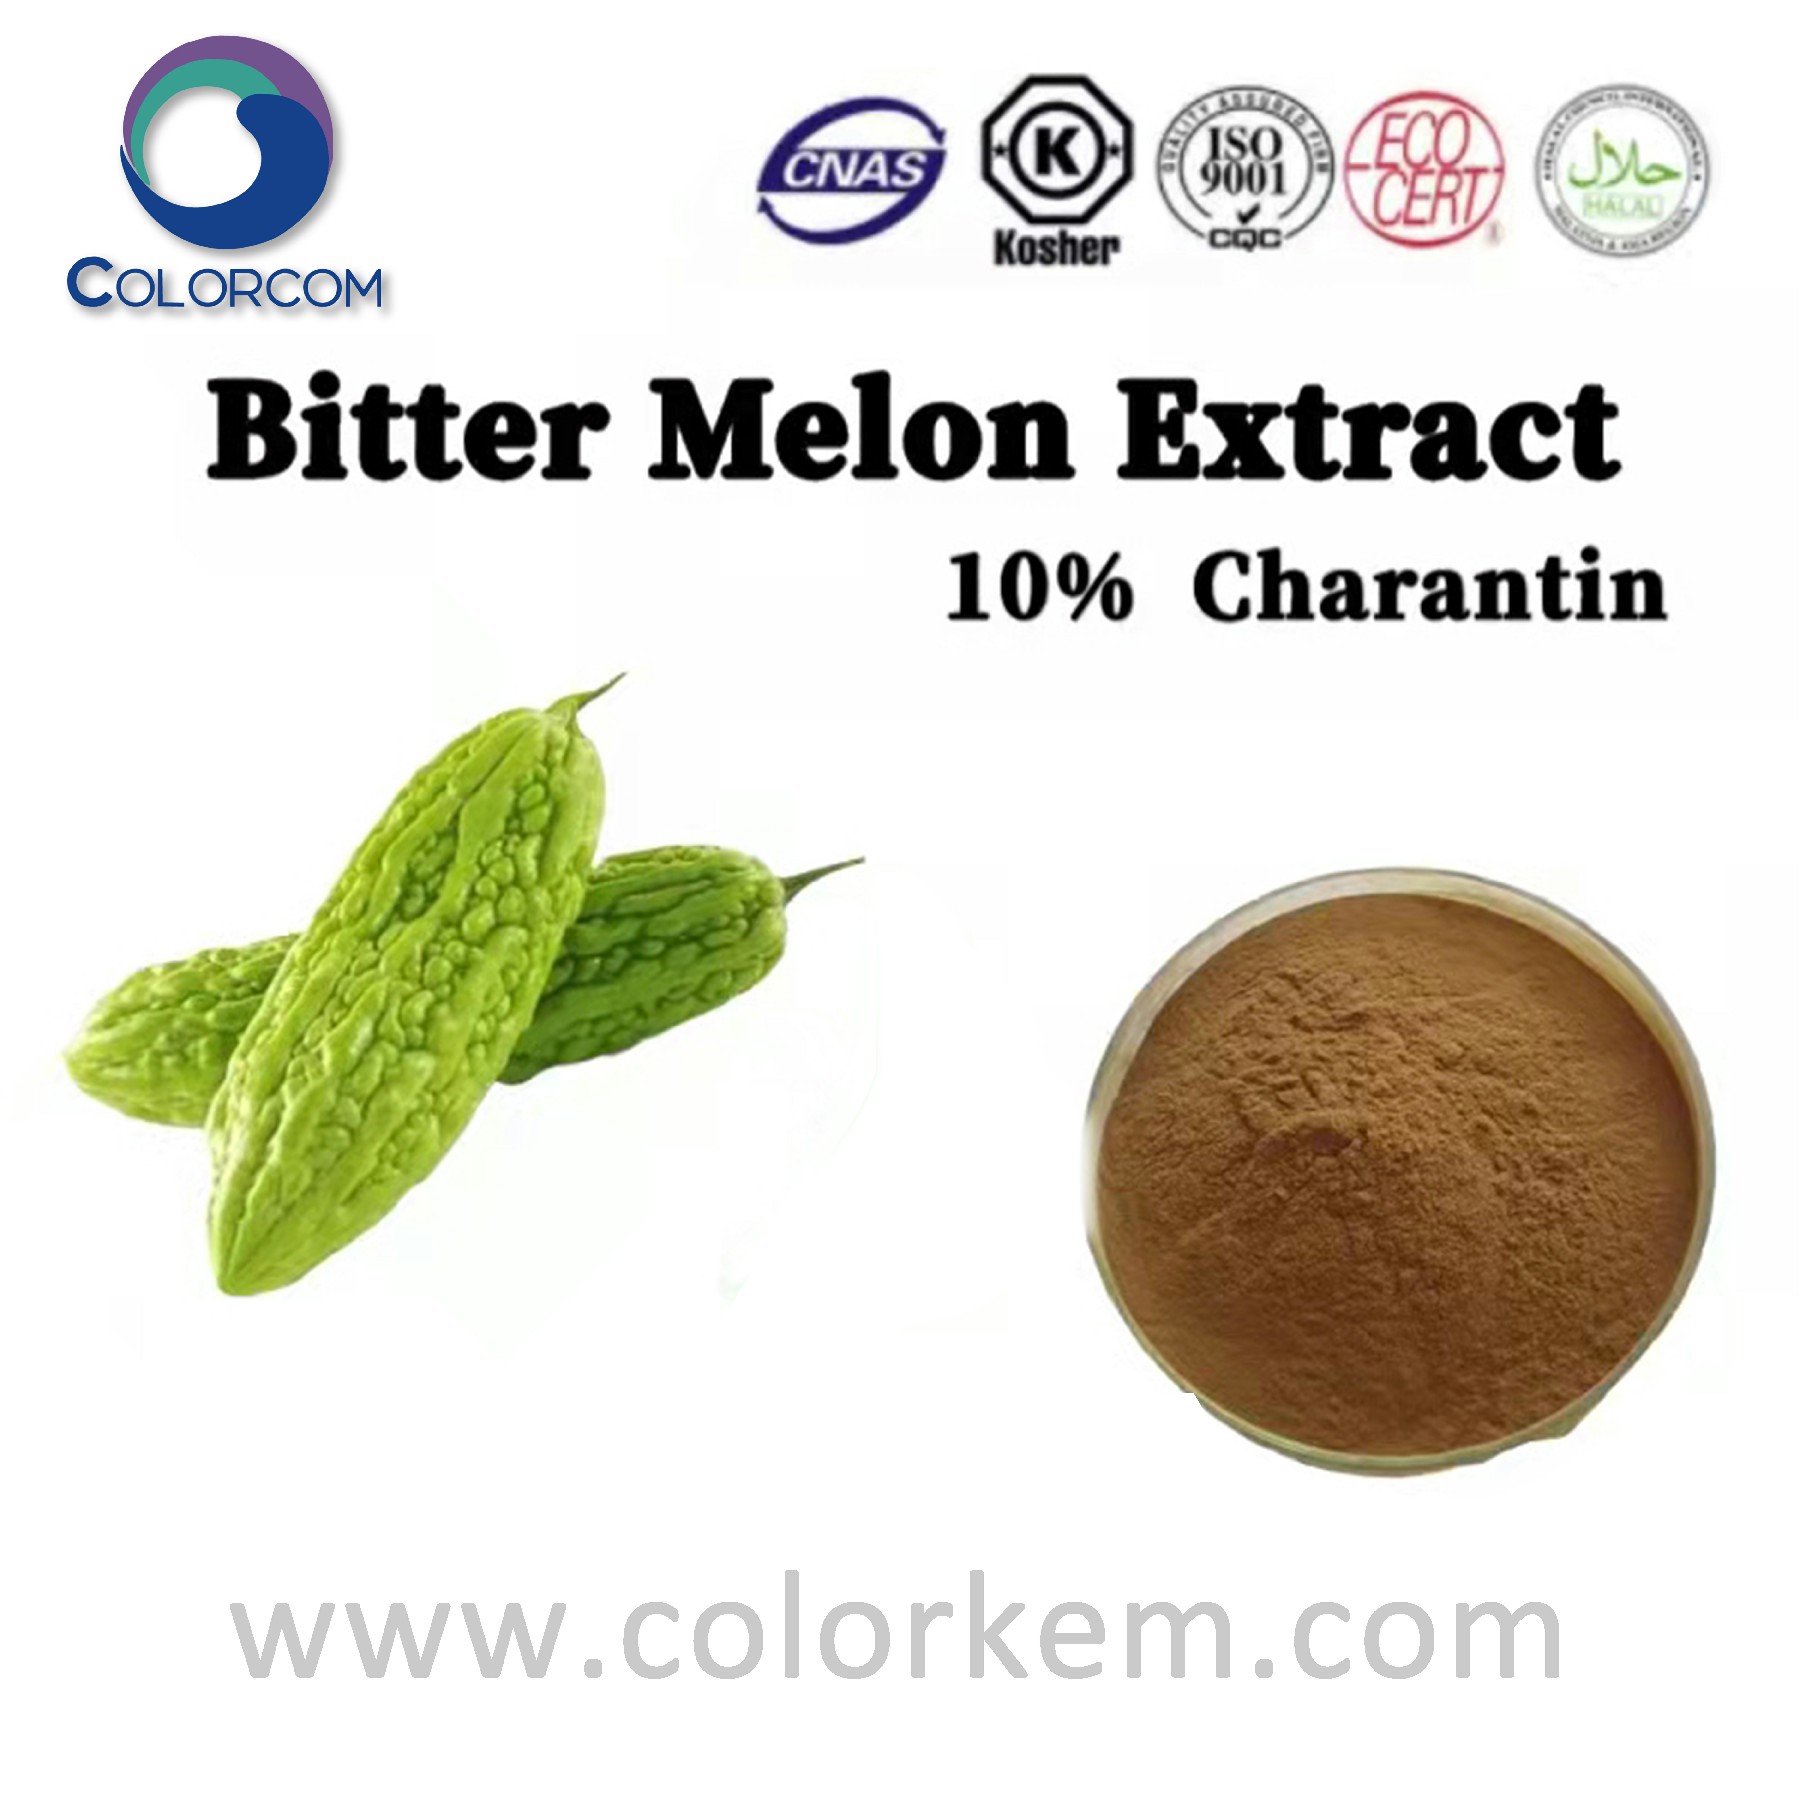 Bitter melon Extract charantin